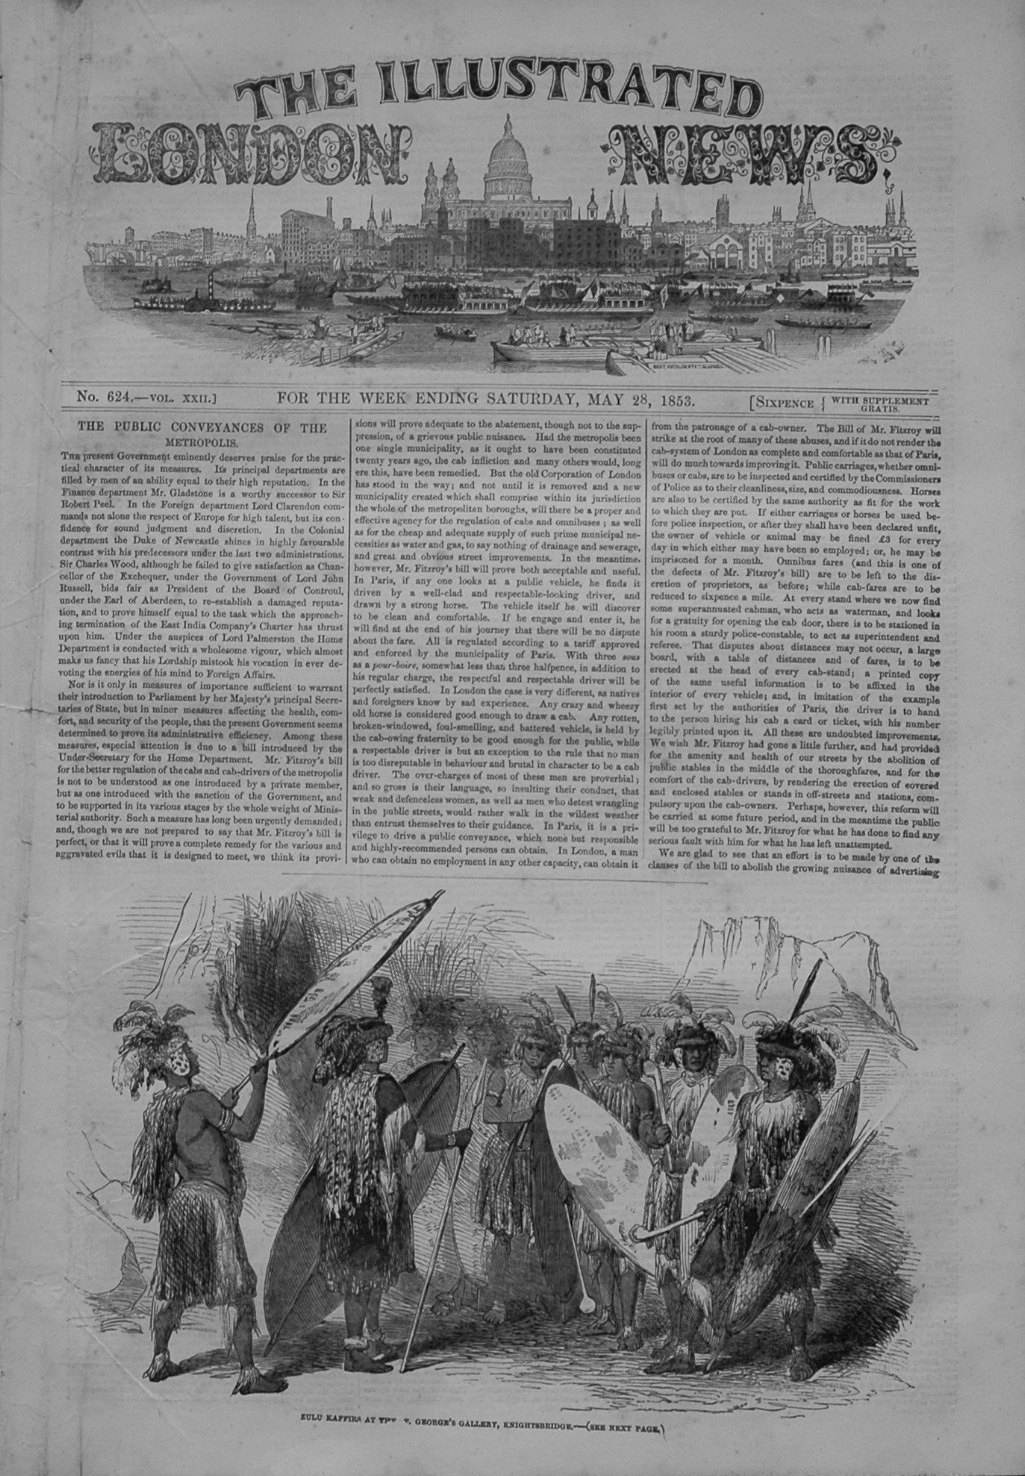 Illustrated London News, May 28th 1853.